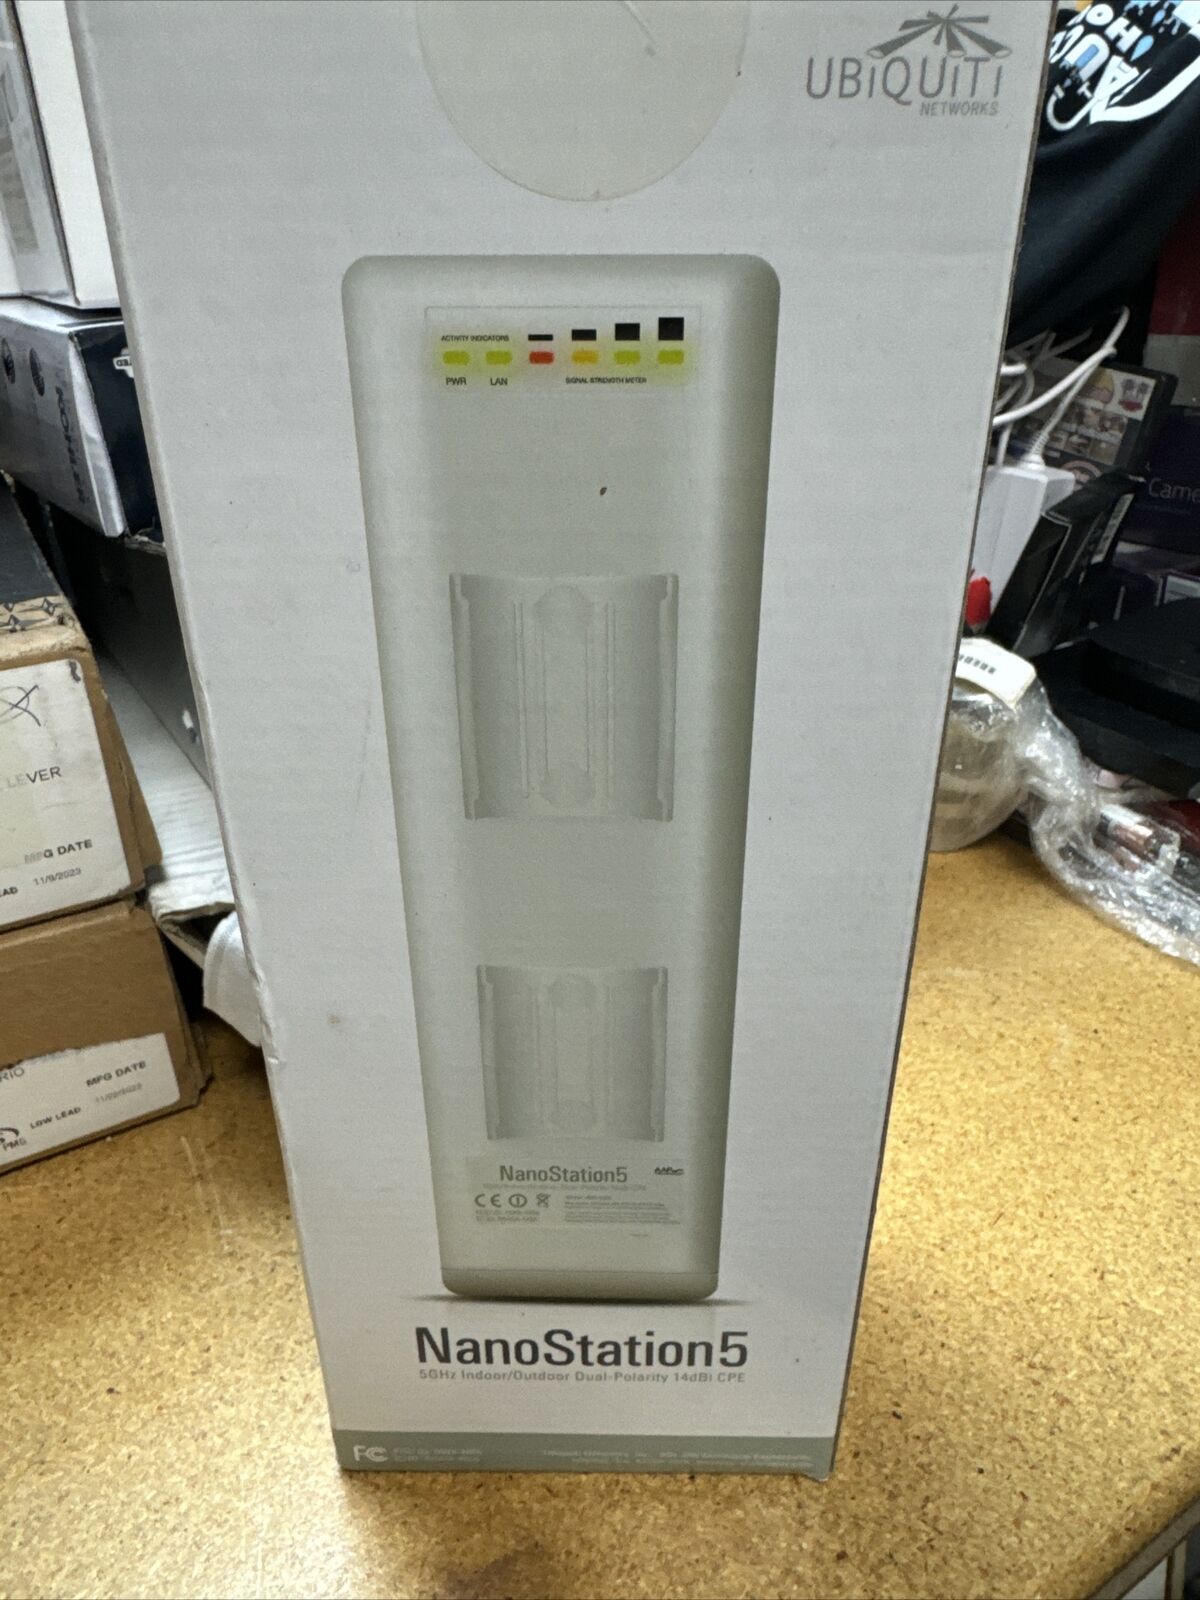 Ubiquiti NSM5-US NanoStation M5 5GHz Indoor/Outdoor airMAX CPE - NEW Open Box